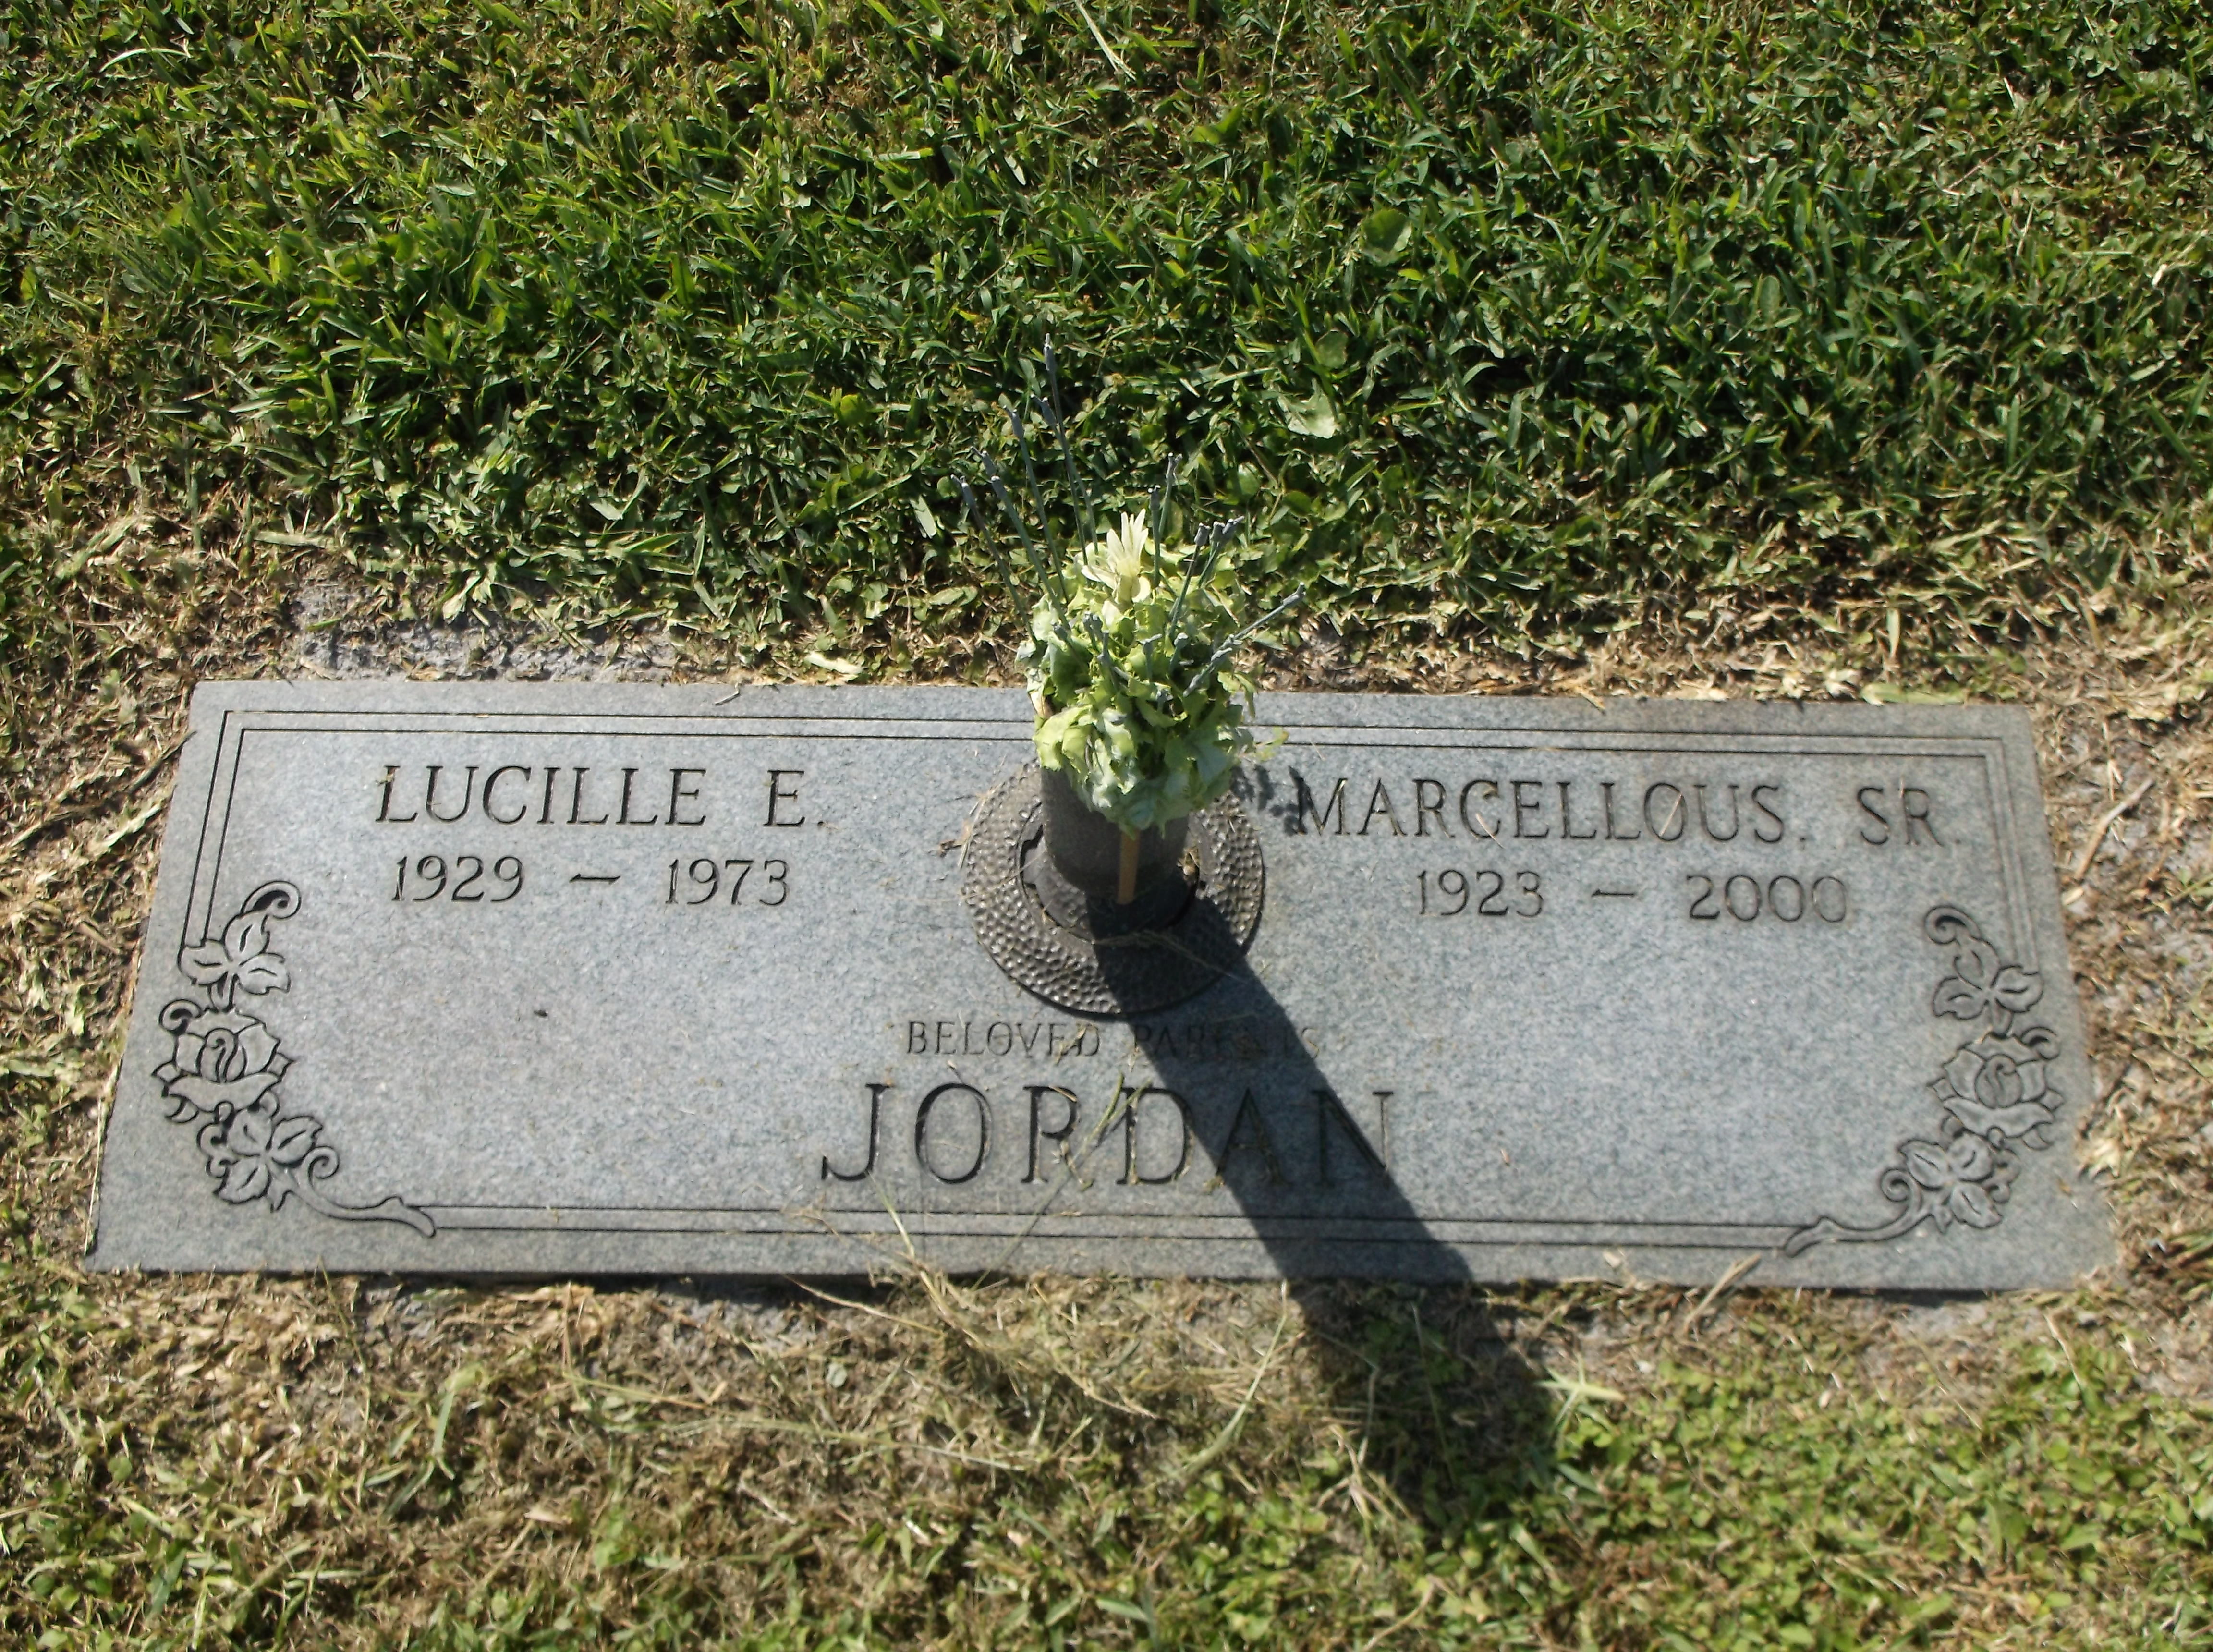 Lucille E Jordan